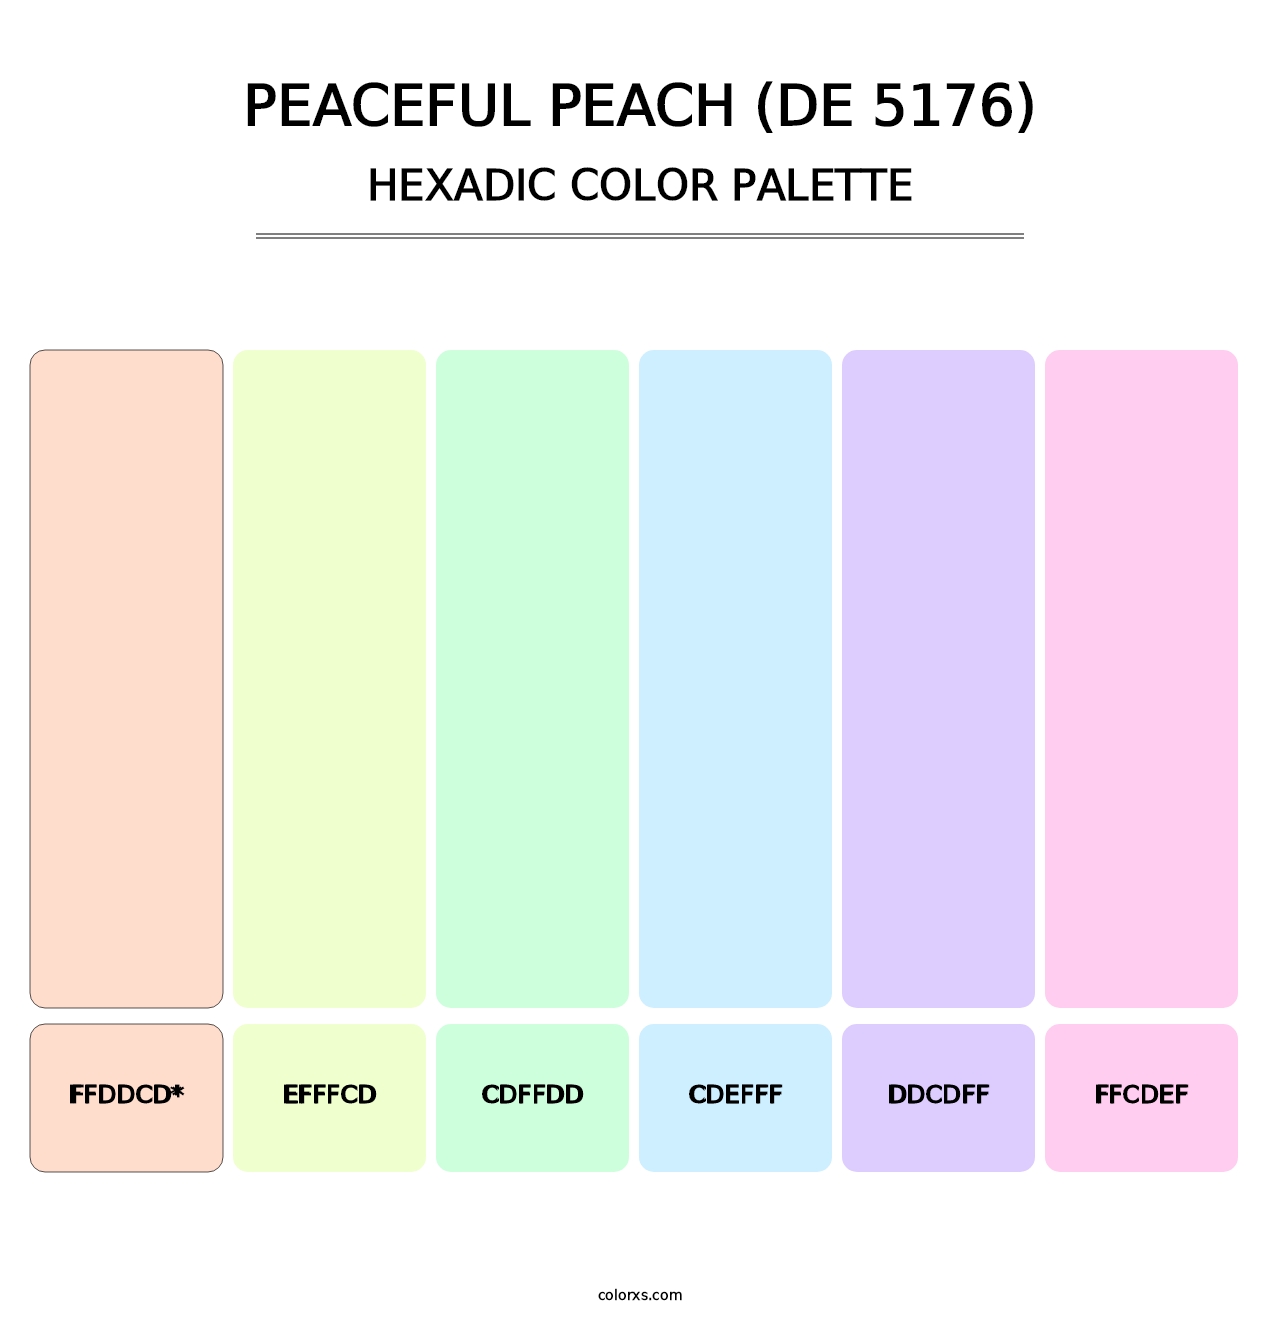 Peaceful Peach (DE 5176) - Hexadic Color Palette